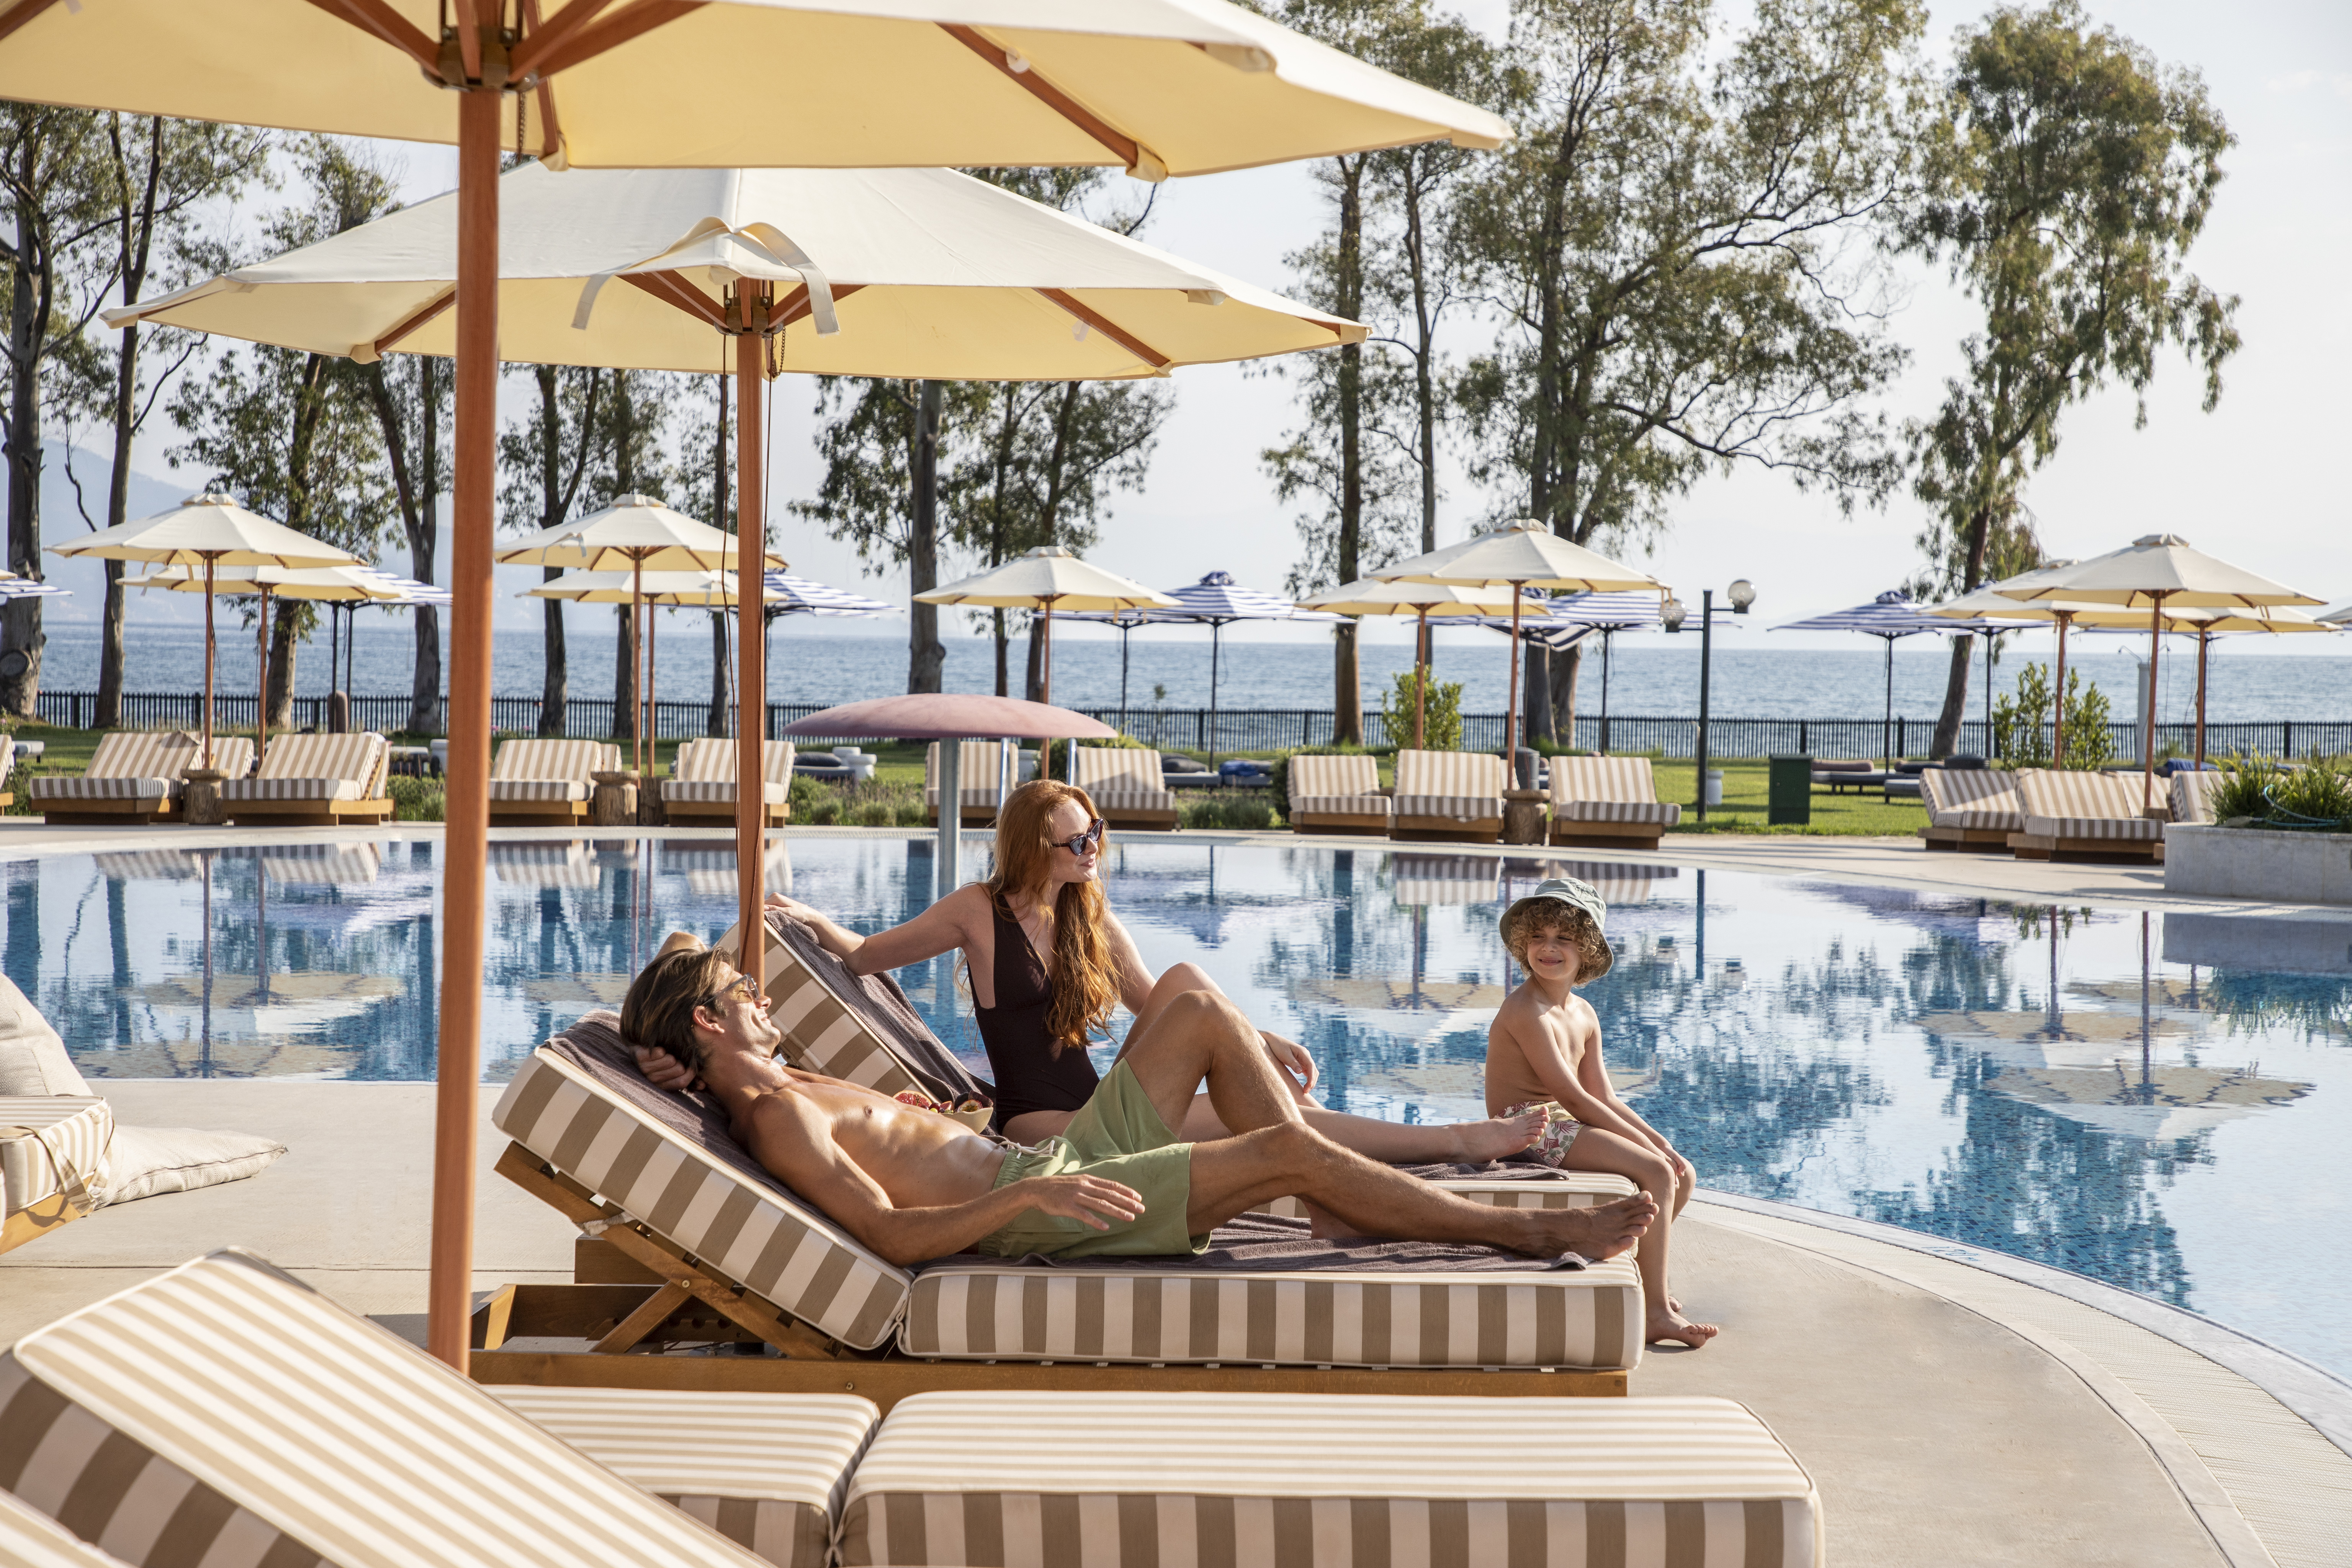 Le Kerkyra Blue Hotel N' Spa cinq étoiles dispose de deux piscines